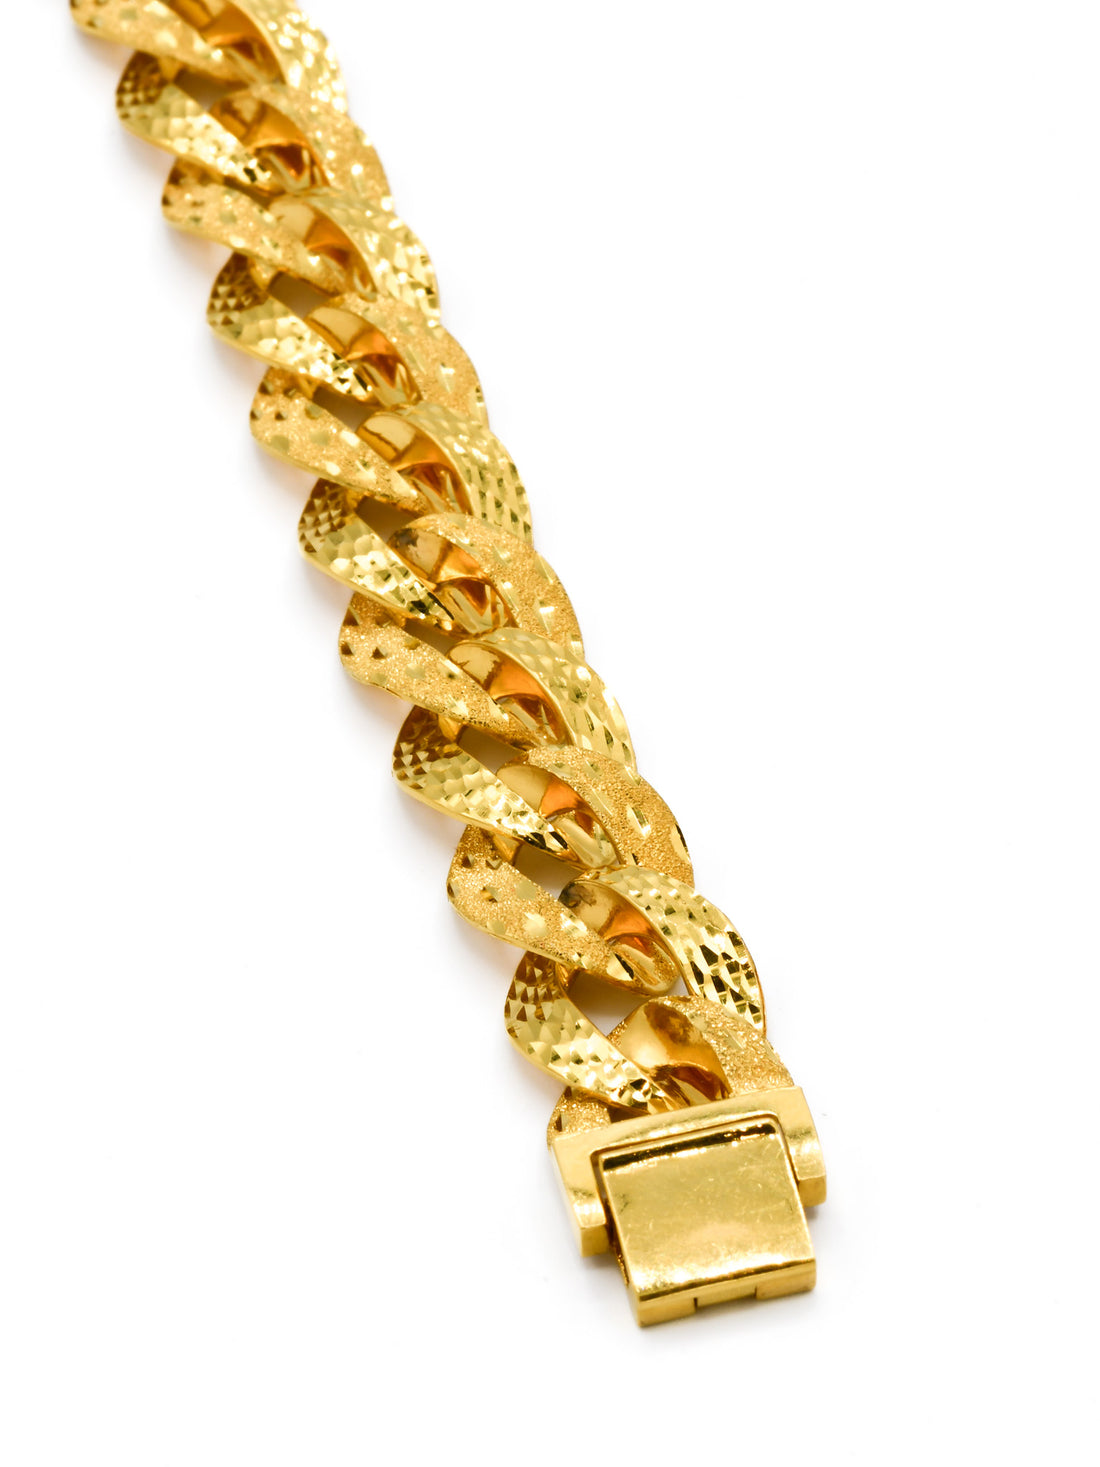 22ct Gold Hollow Curb Mens Bracelet - Roop Darshan